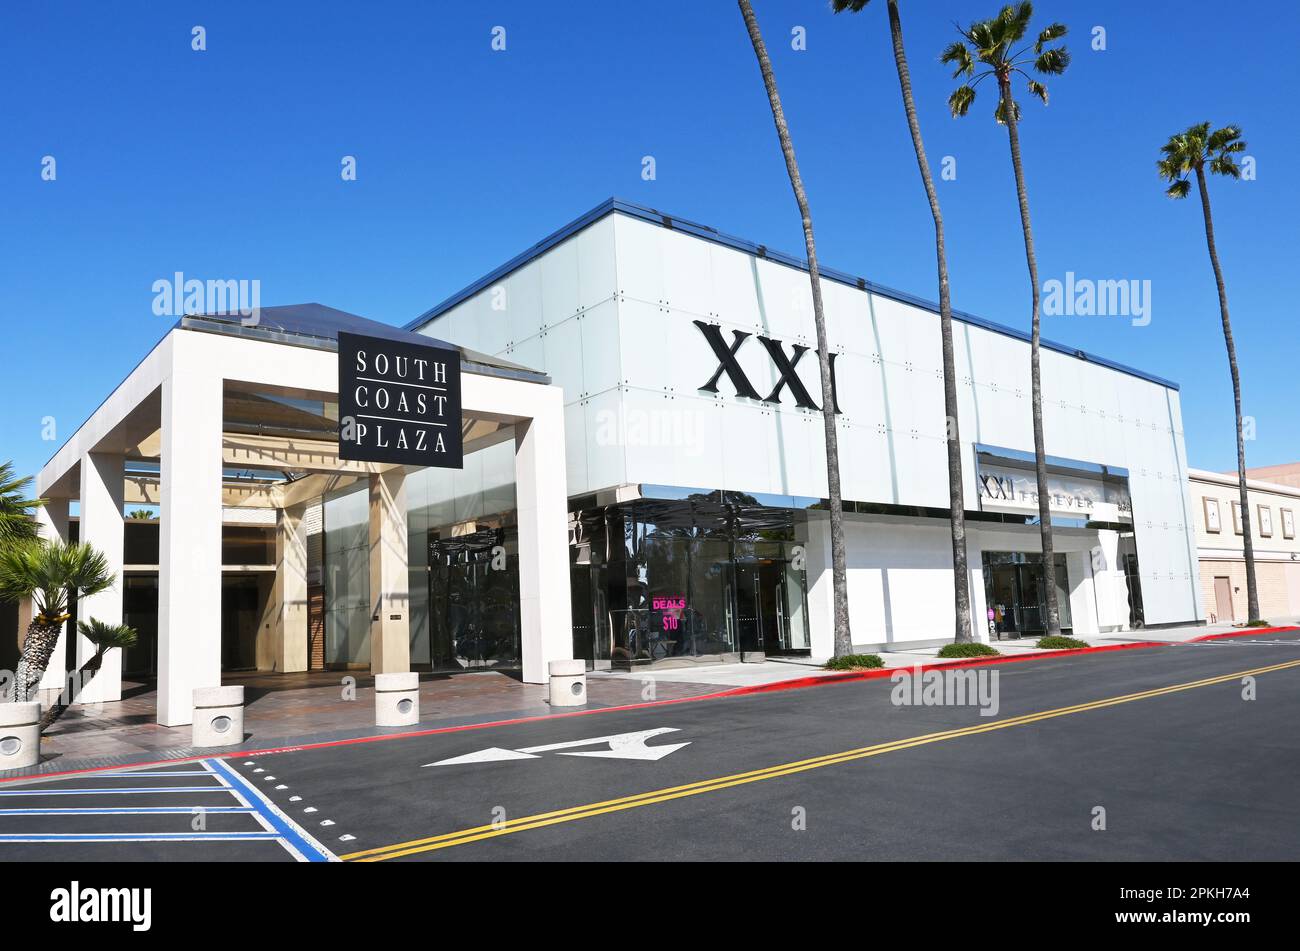 South coast plaza mall costa mesa hi-res stock photography and